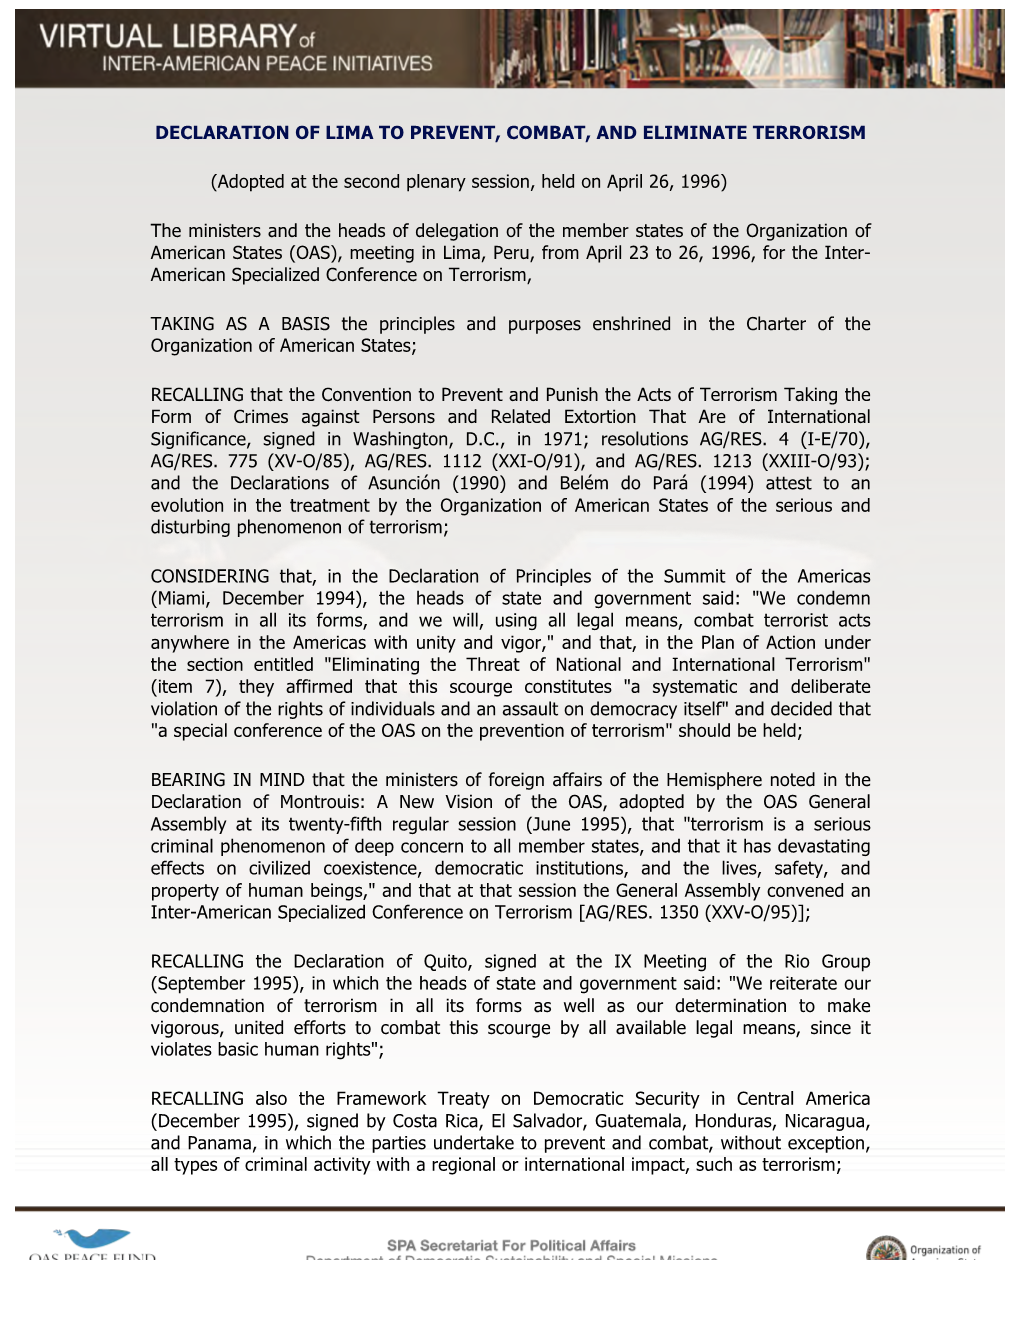 Declaration of Lima to Prevent, Combat, and Eliminate Terrorism